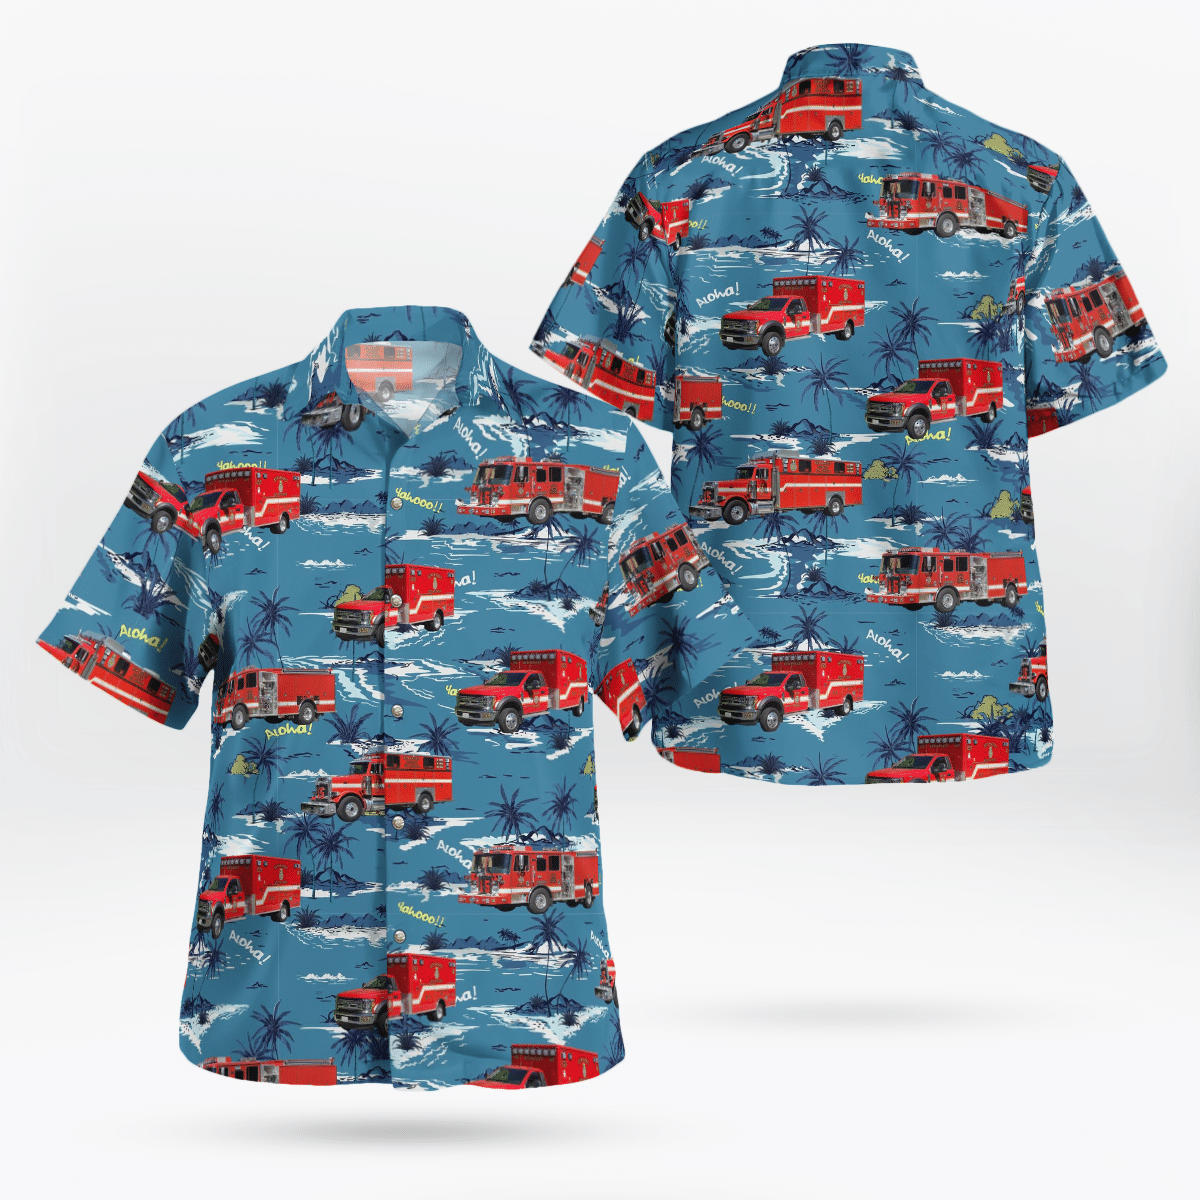 Why don't you order Hot Hawaiian Shirt today? 393